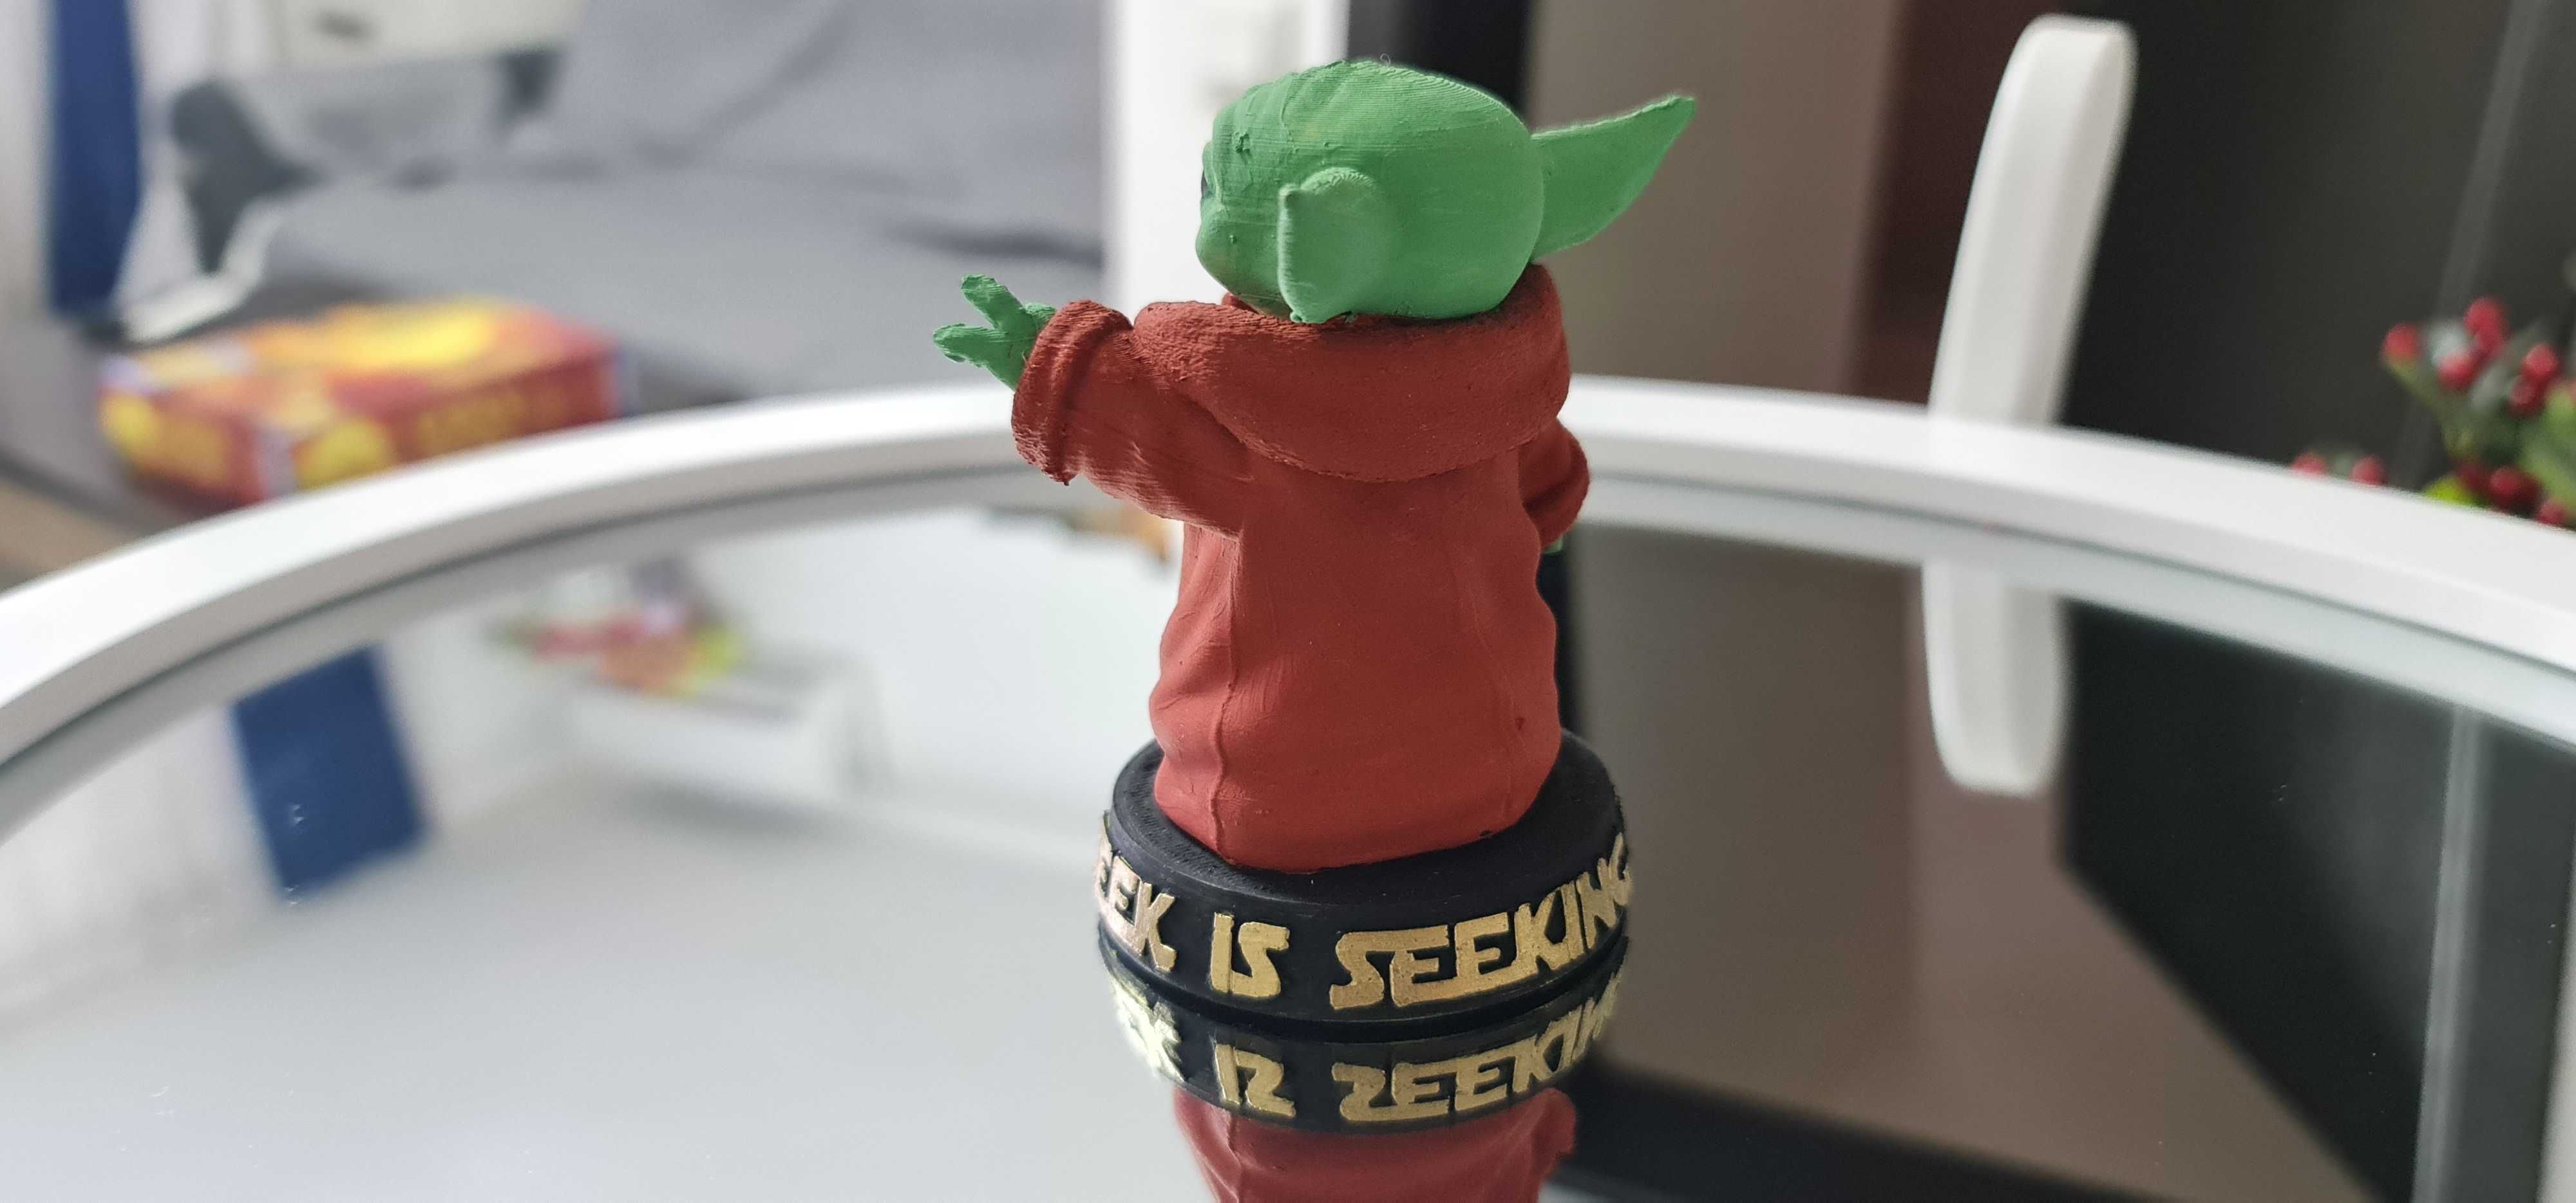 Baby Yoda Printat 3d Decorativ pentru Acasa sau Birou